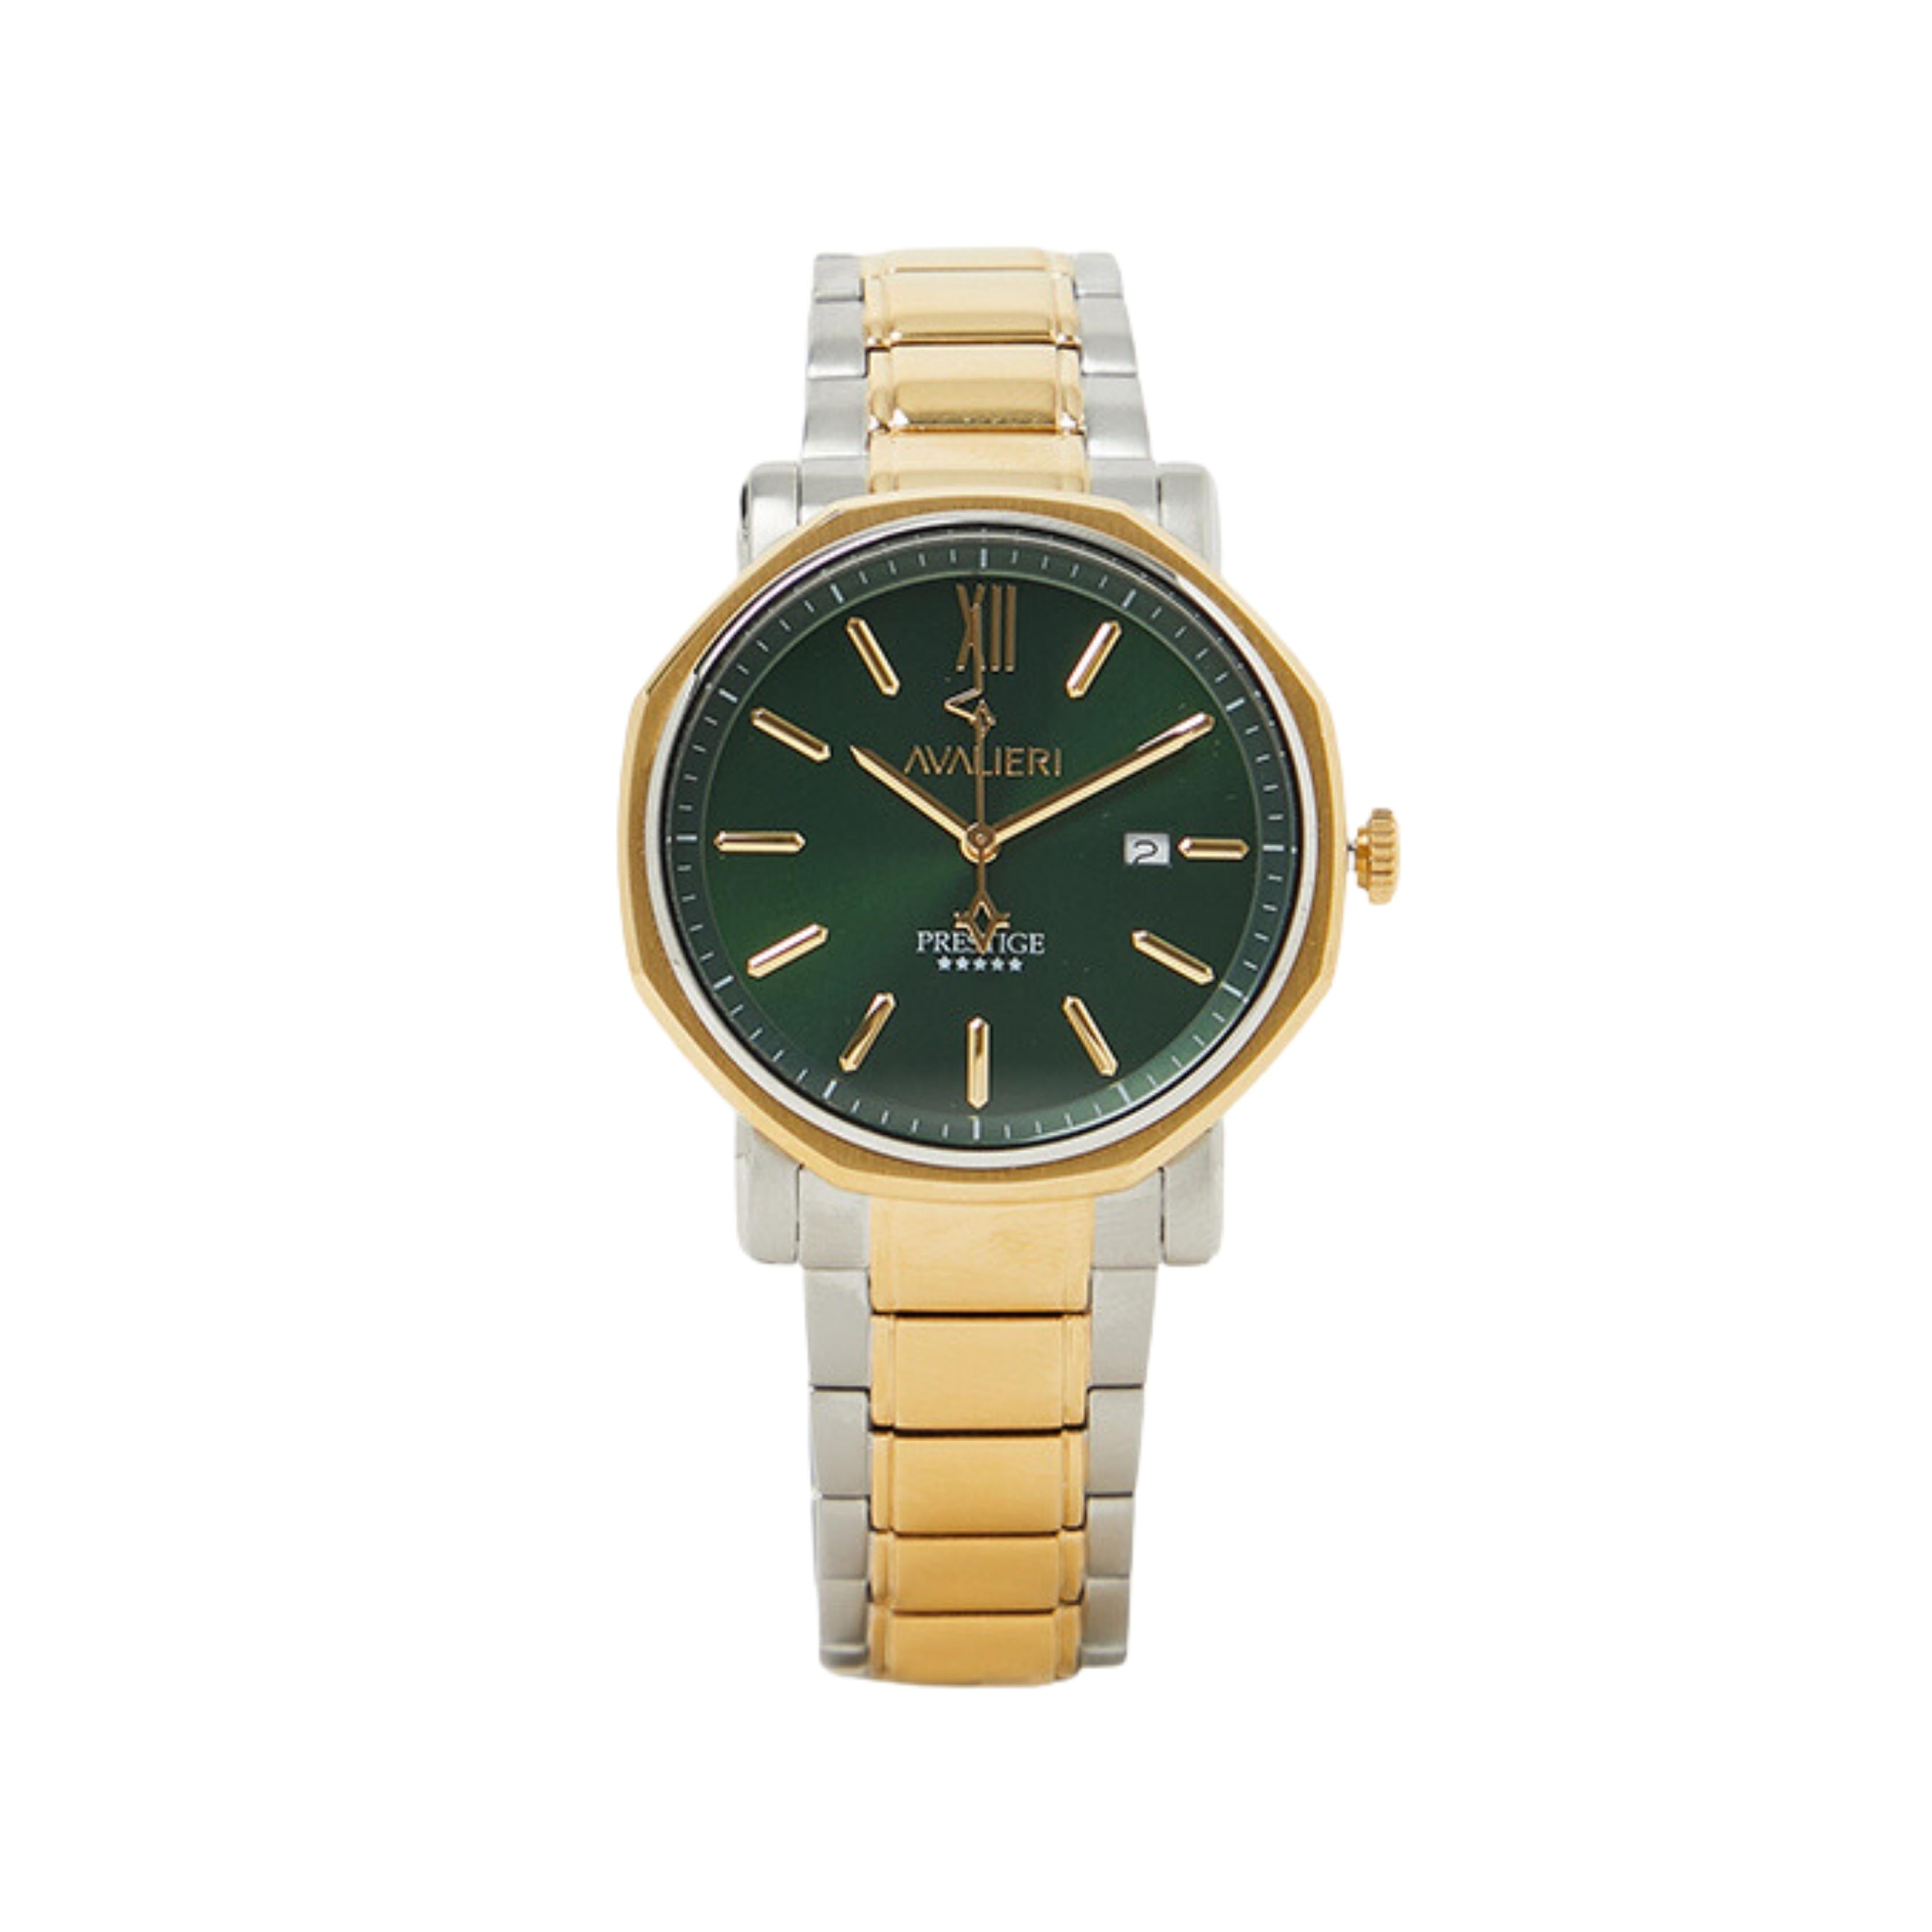 Avalieri Prestige Men's Quartz Green Dial Watch - AP-0145